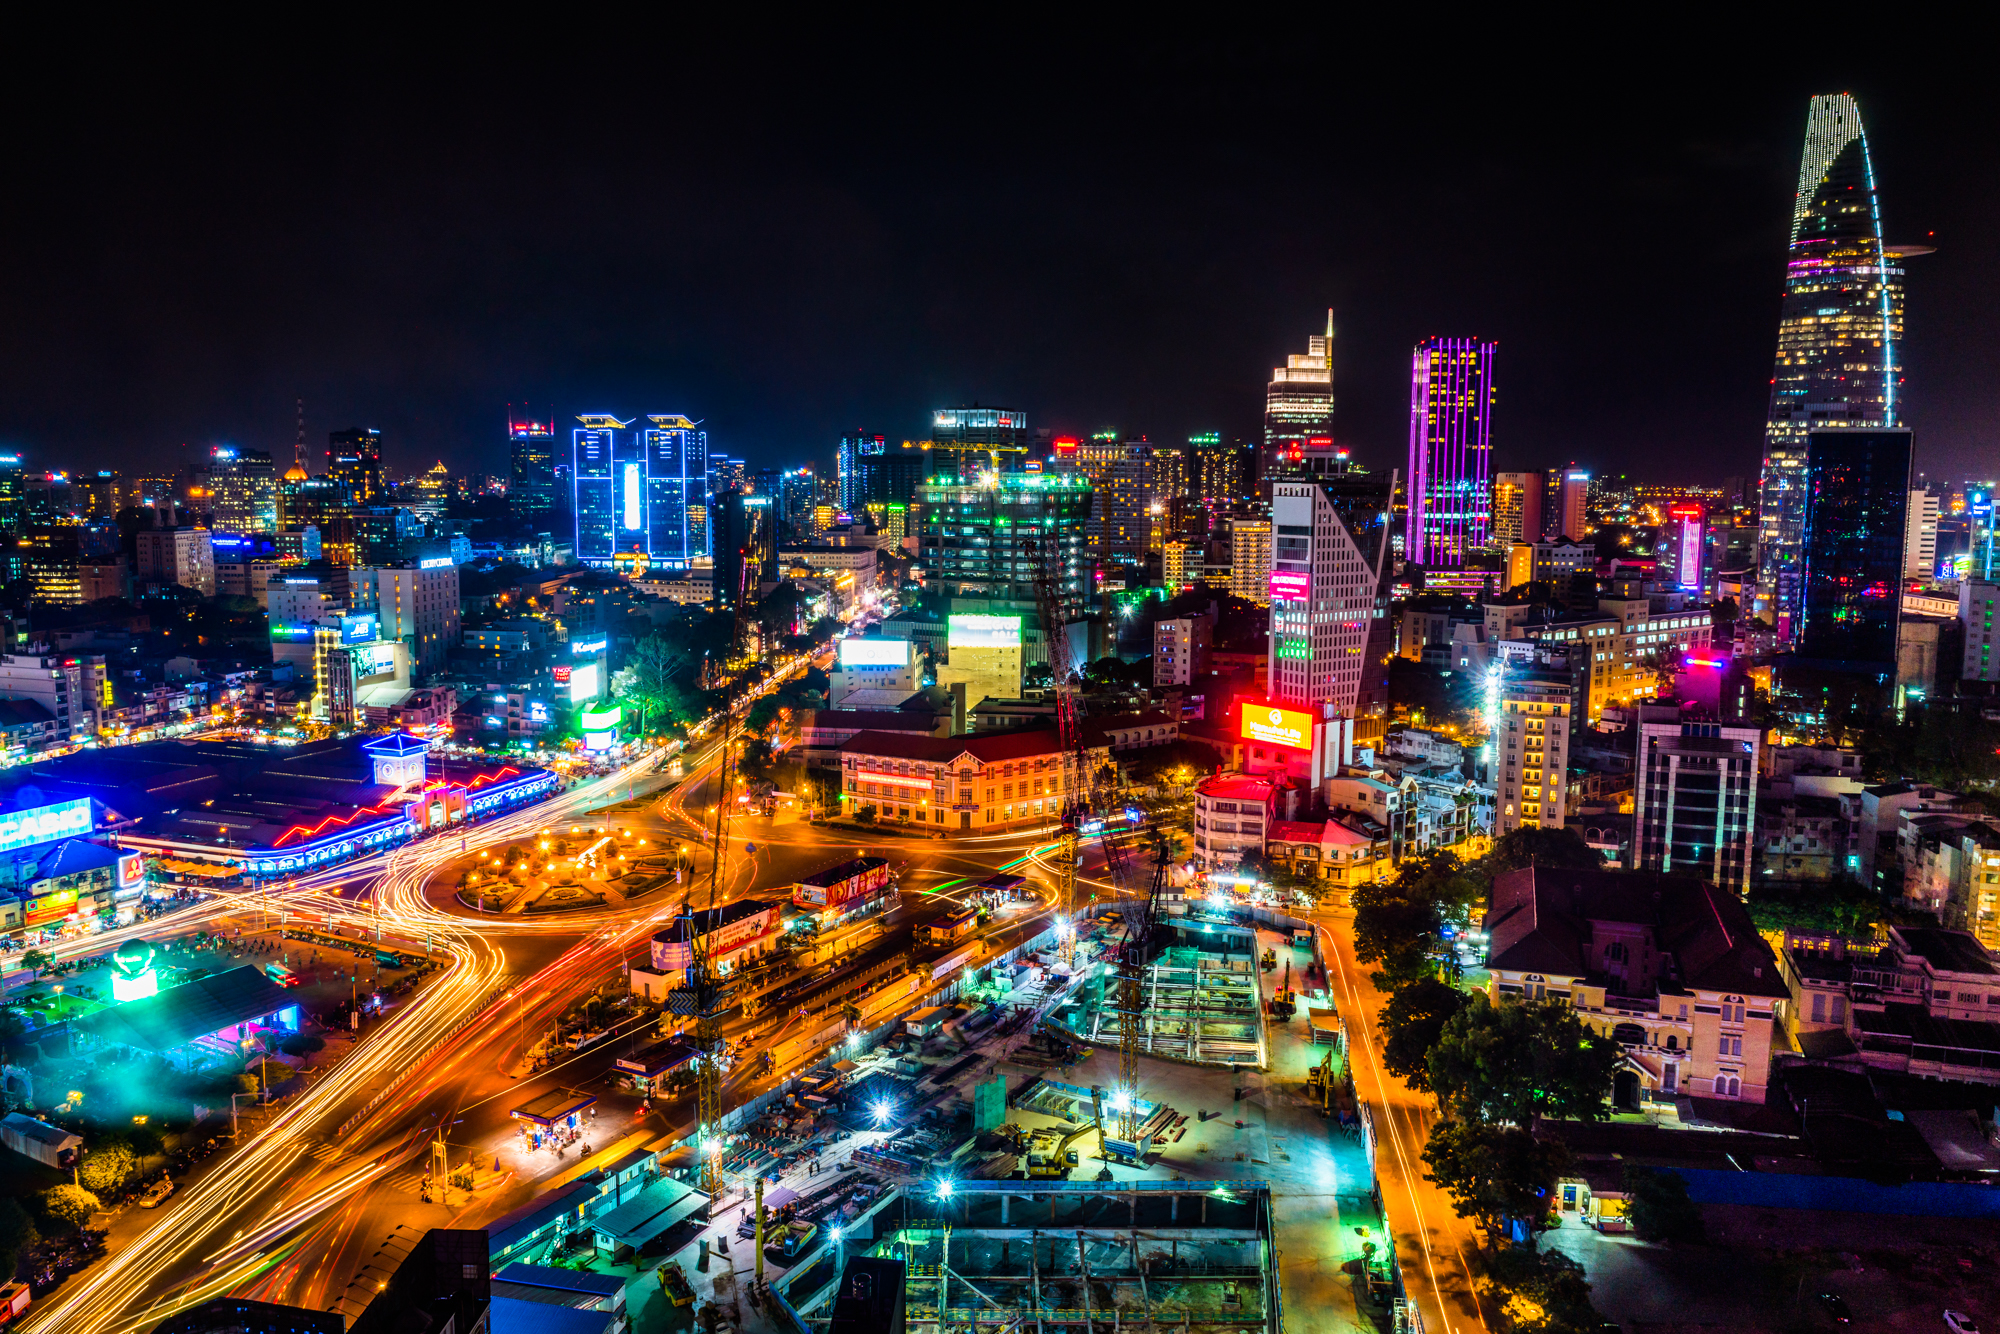 A nighttime view of a bustling Ho Chi Minh City, Vietnam